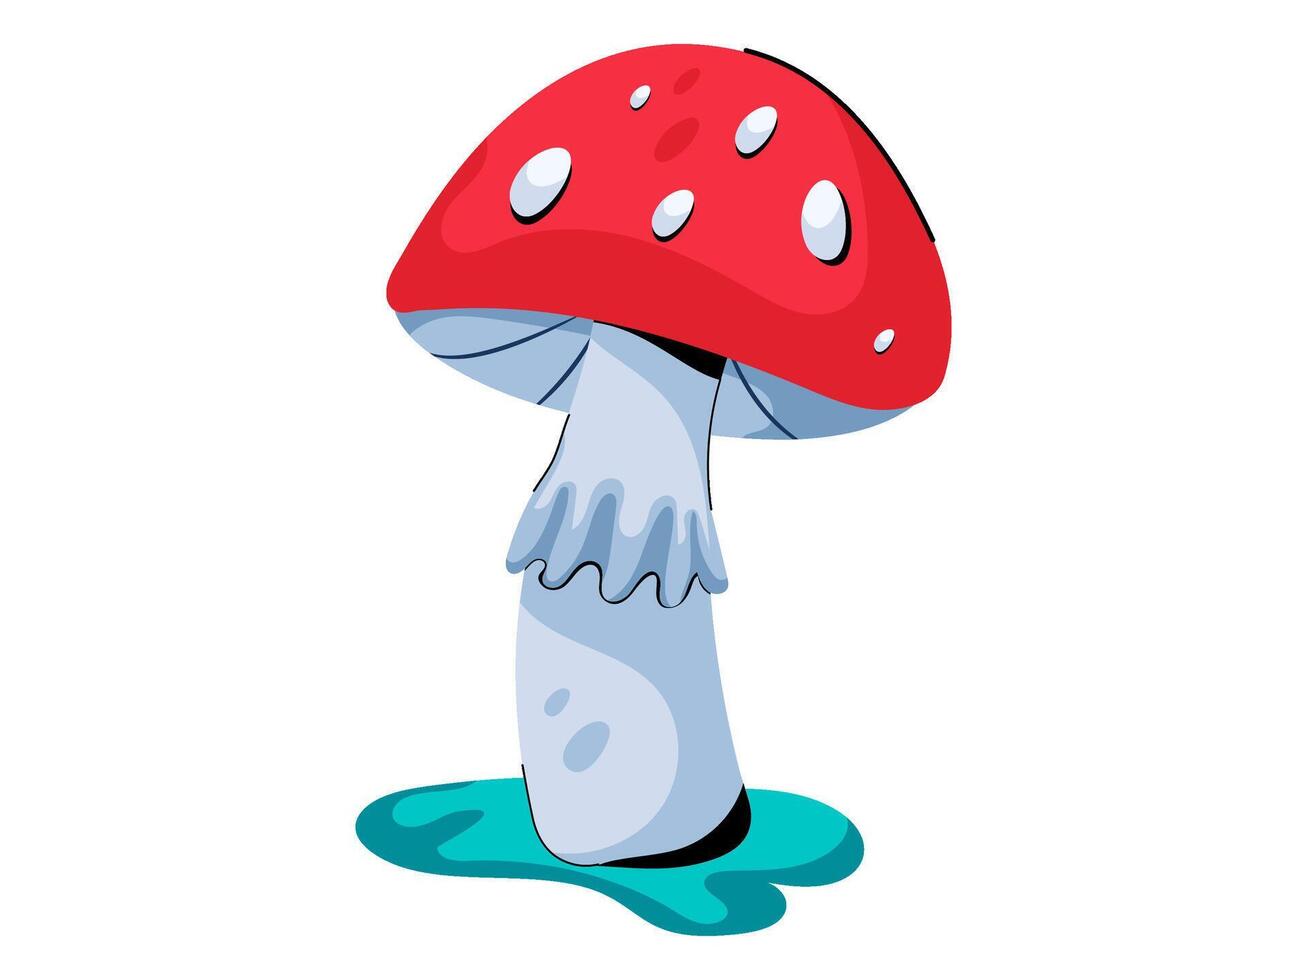 mushroom design with modern illustration concept style for badge farm agriculture sticker illustration vector